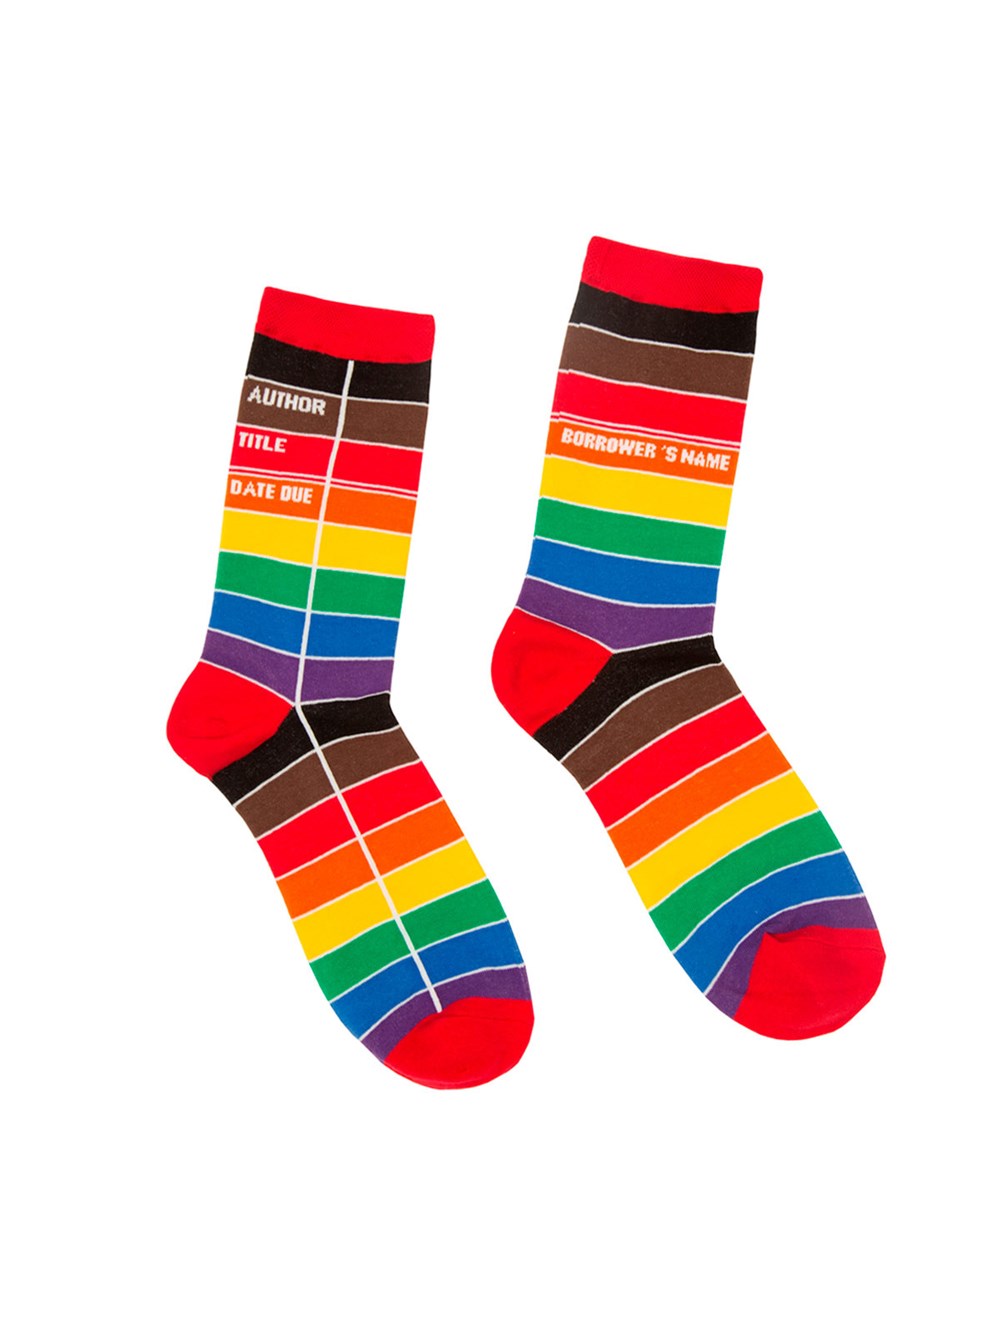 Library Card Pride Socks